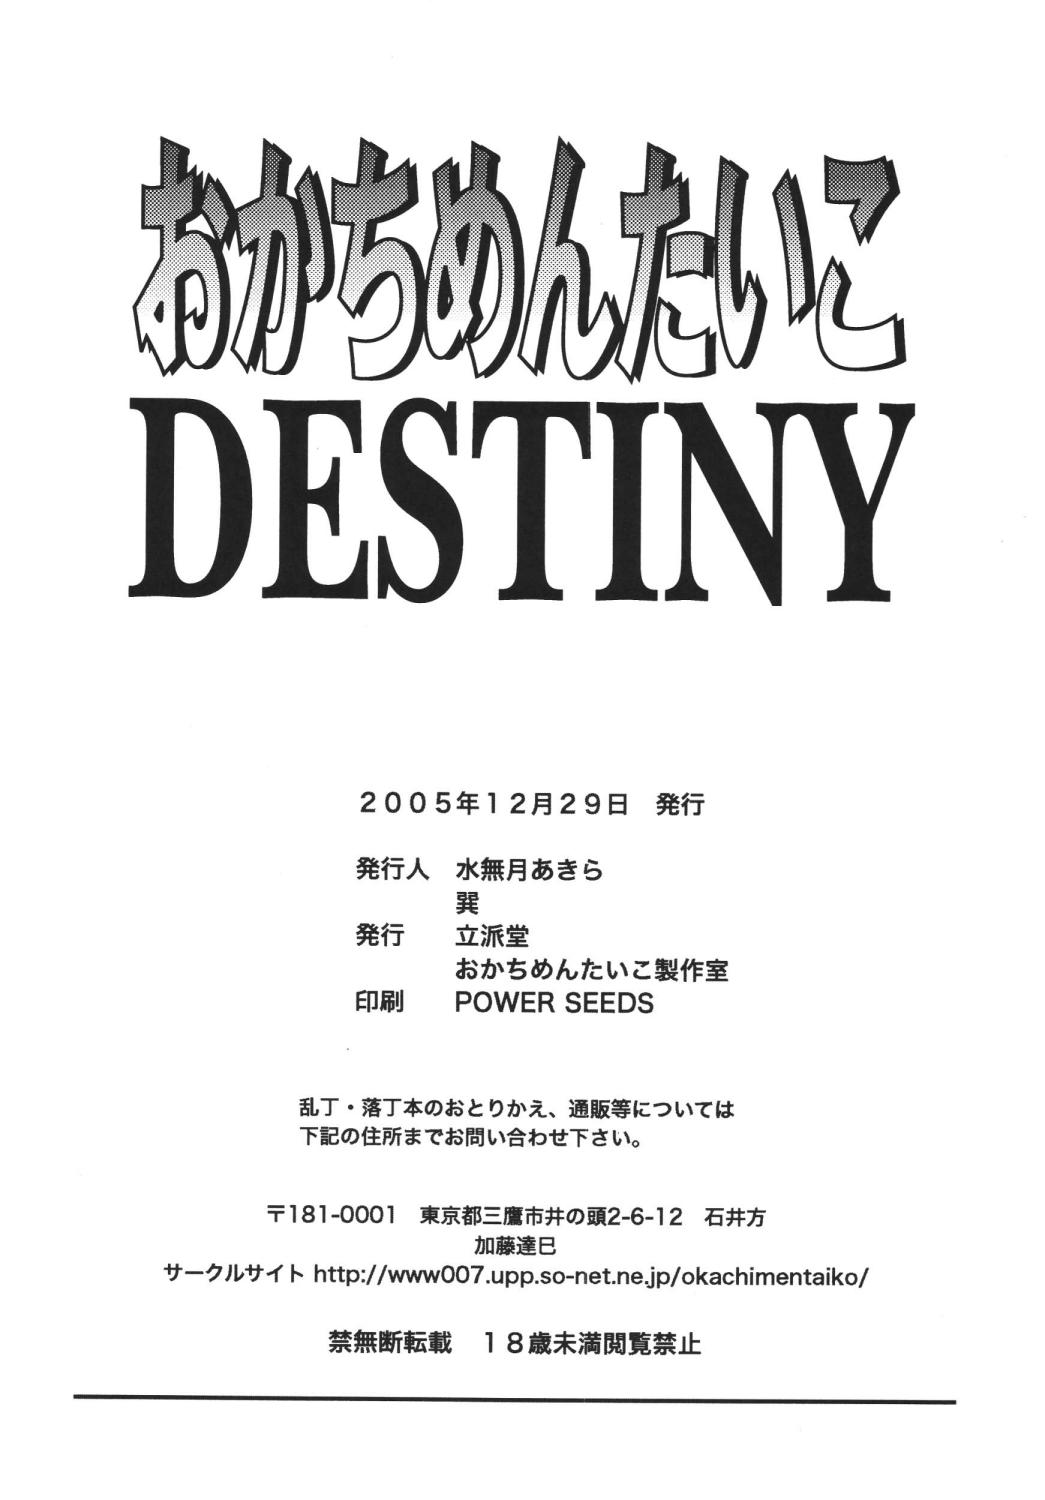 Okachi Mentaiko DESTINY 88